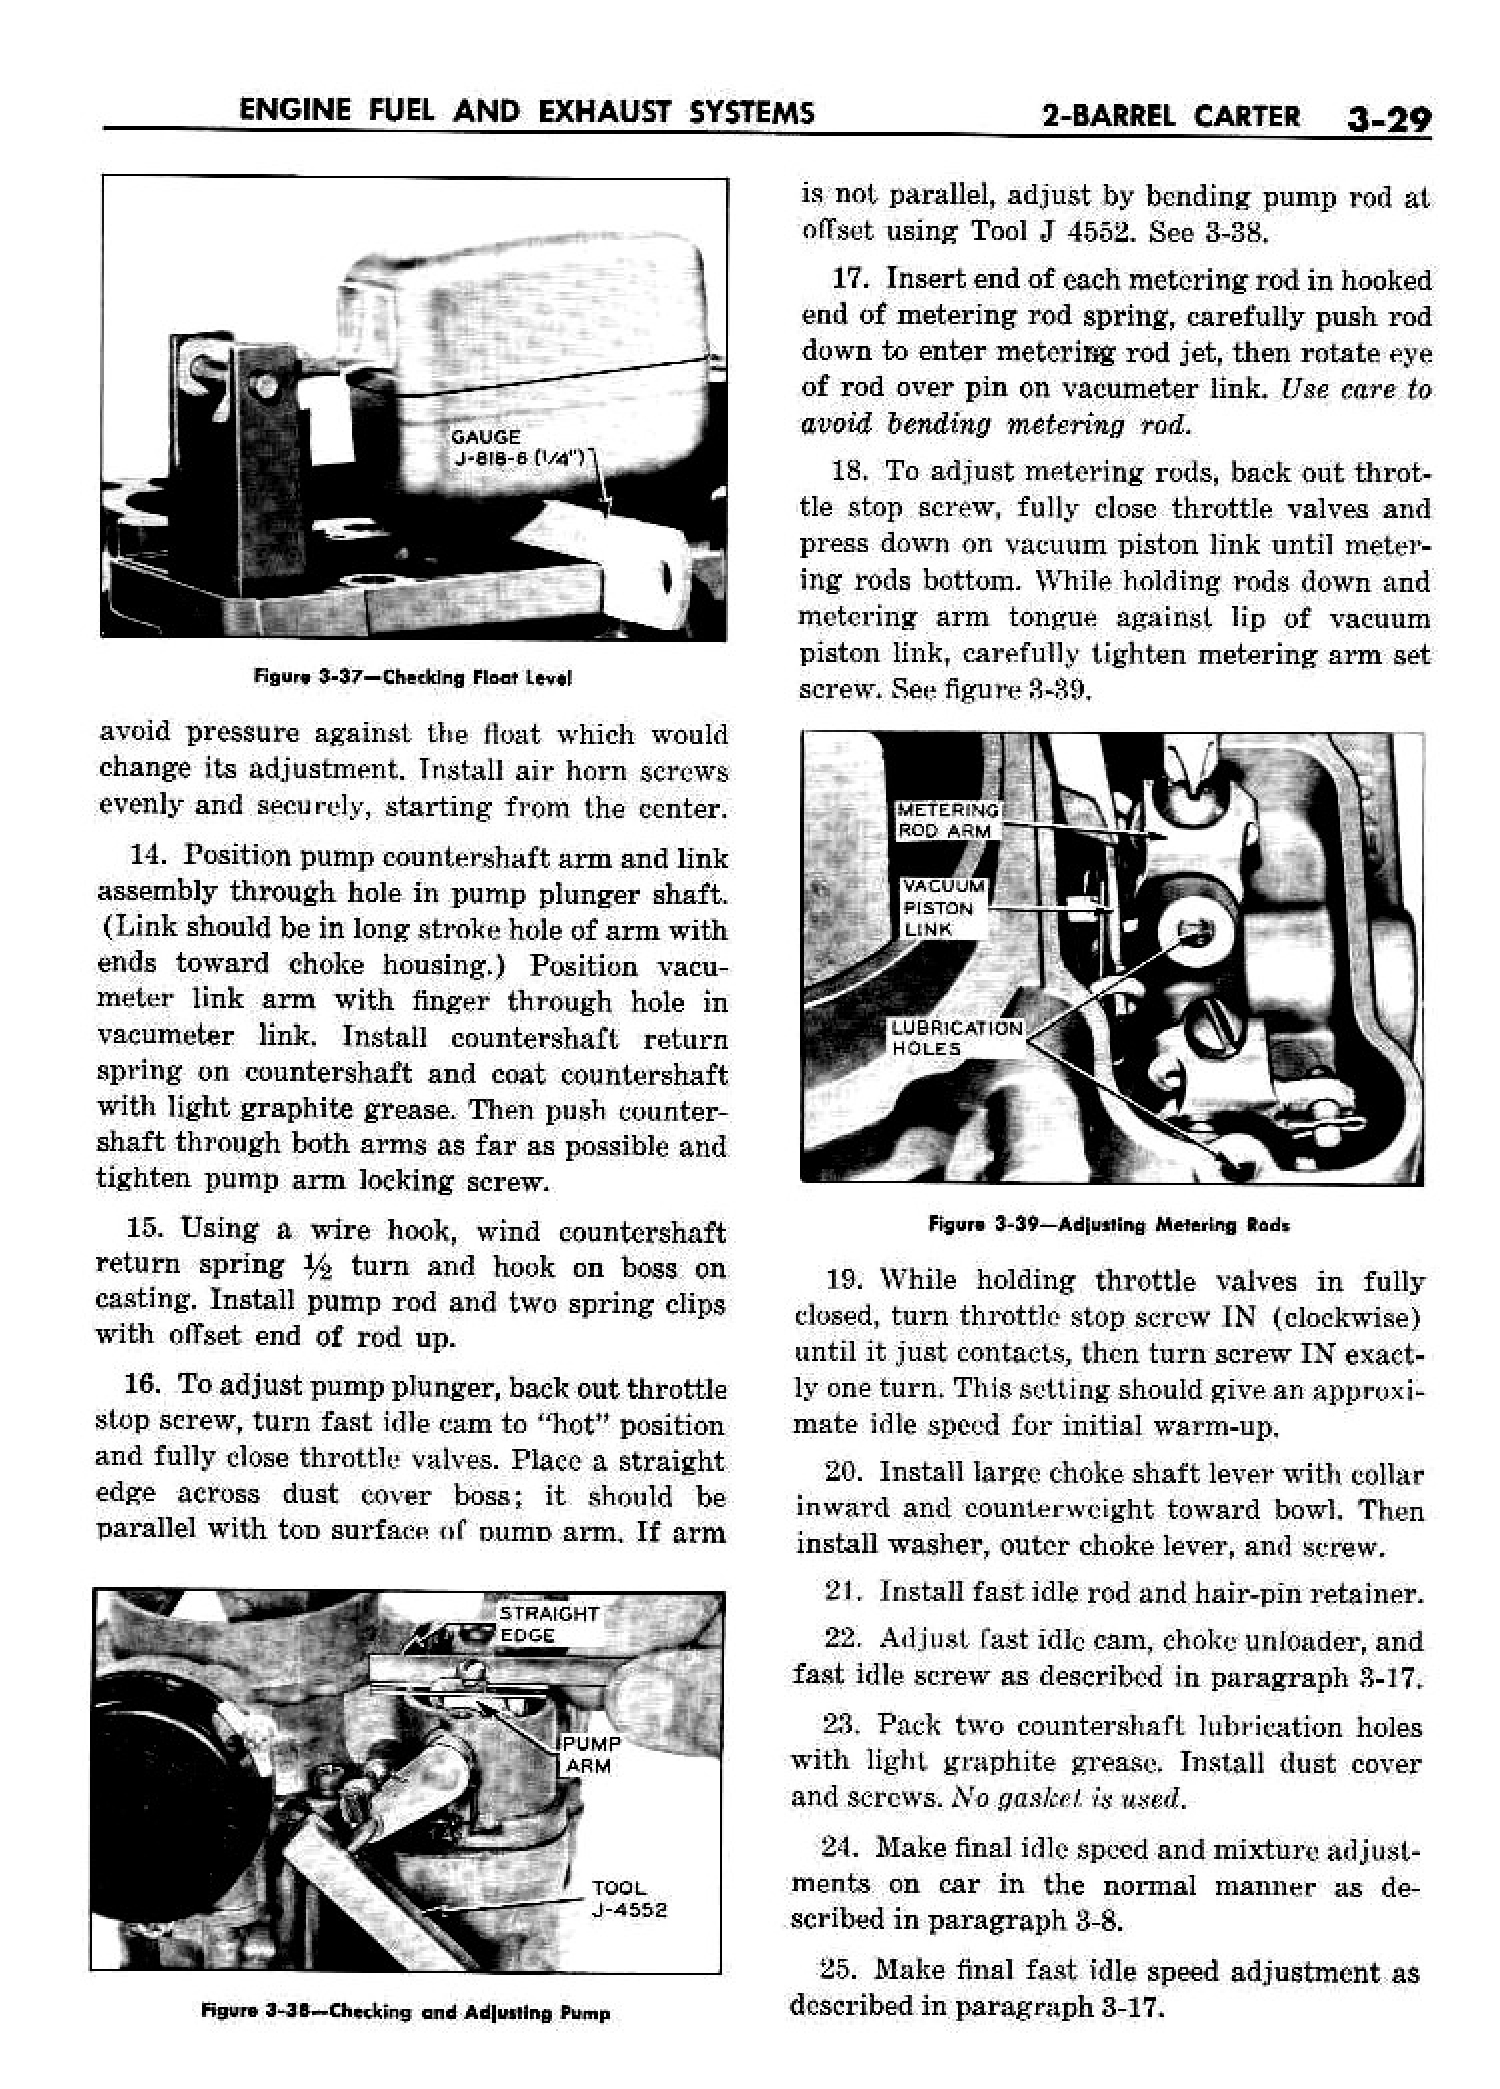 n_04 1958 Buick Shop Manual - Engine Fuel & Exhaust_29.jpg